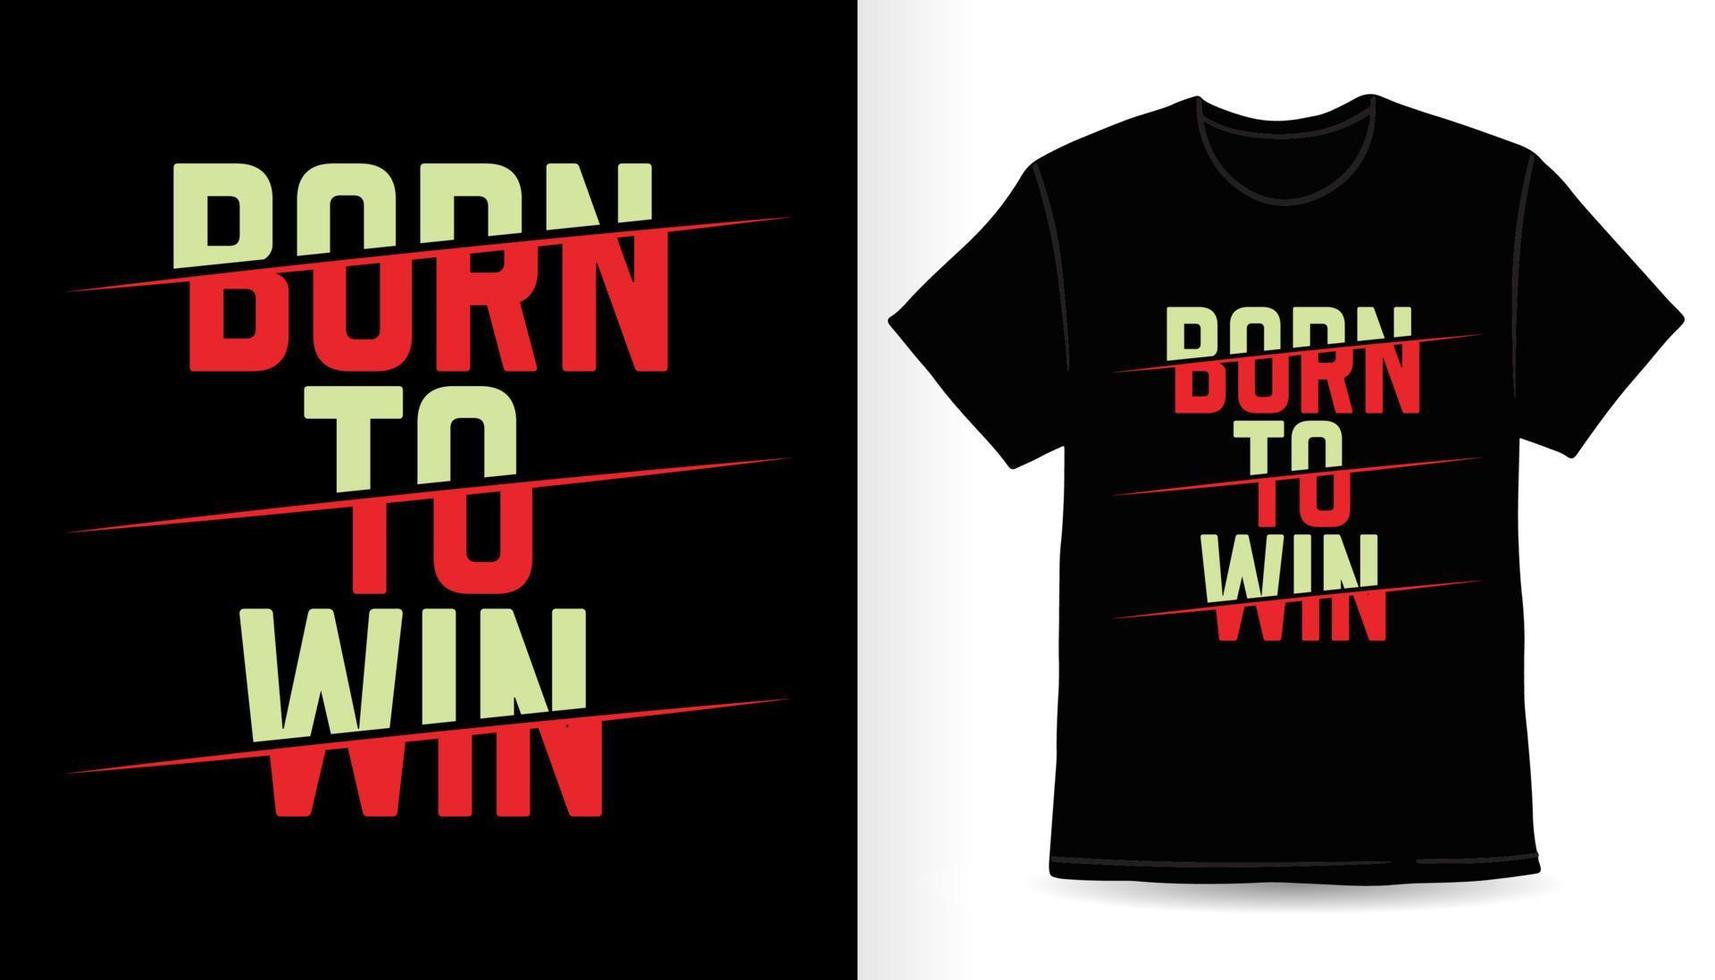 Born to win typography slogan t-shirt print design vector